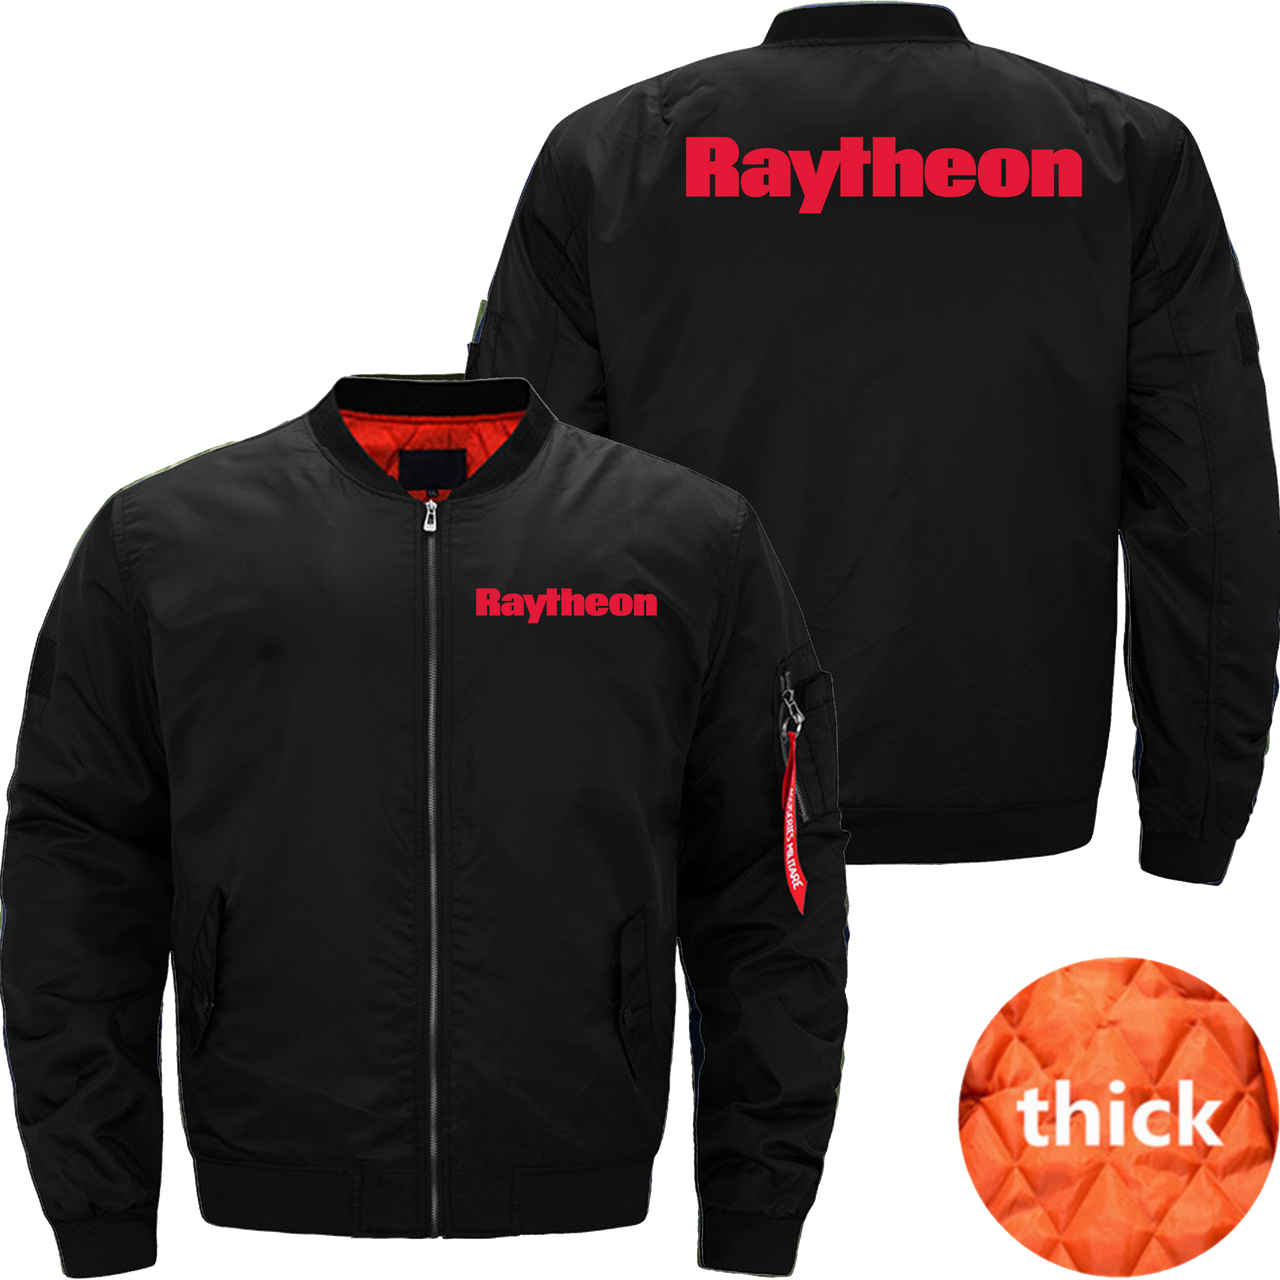 Raytheon-Jacke 